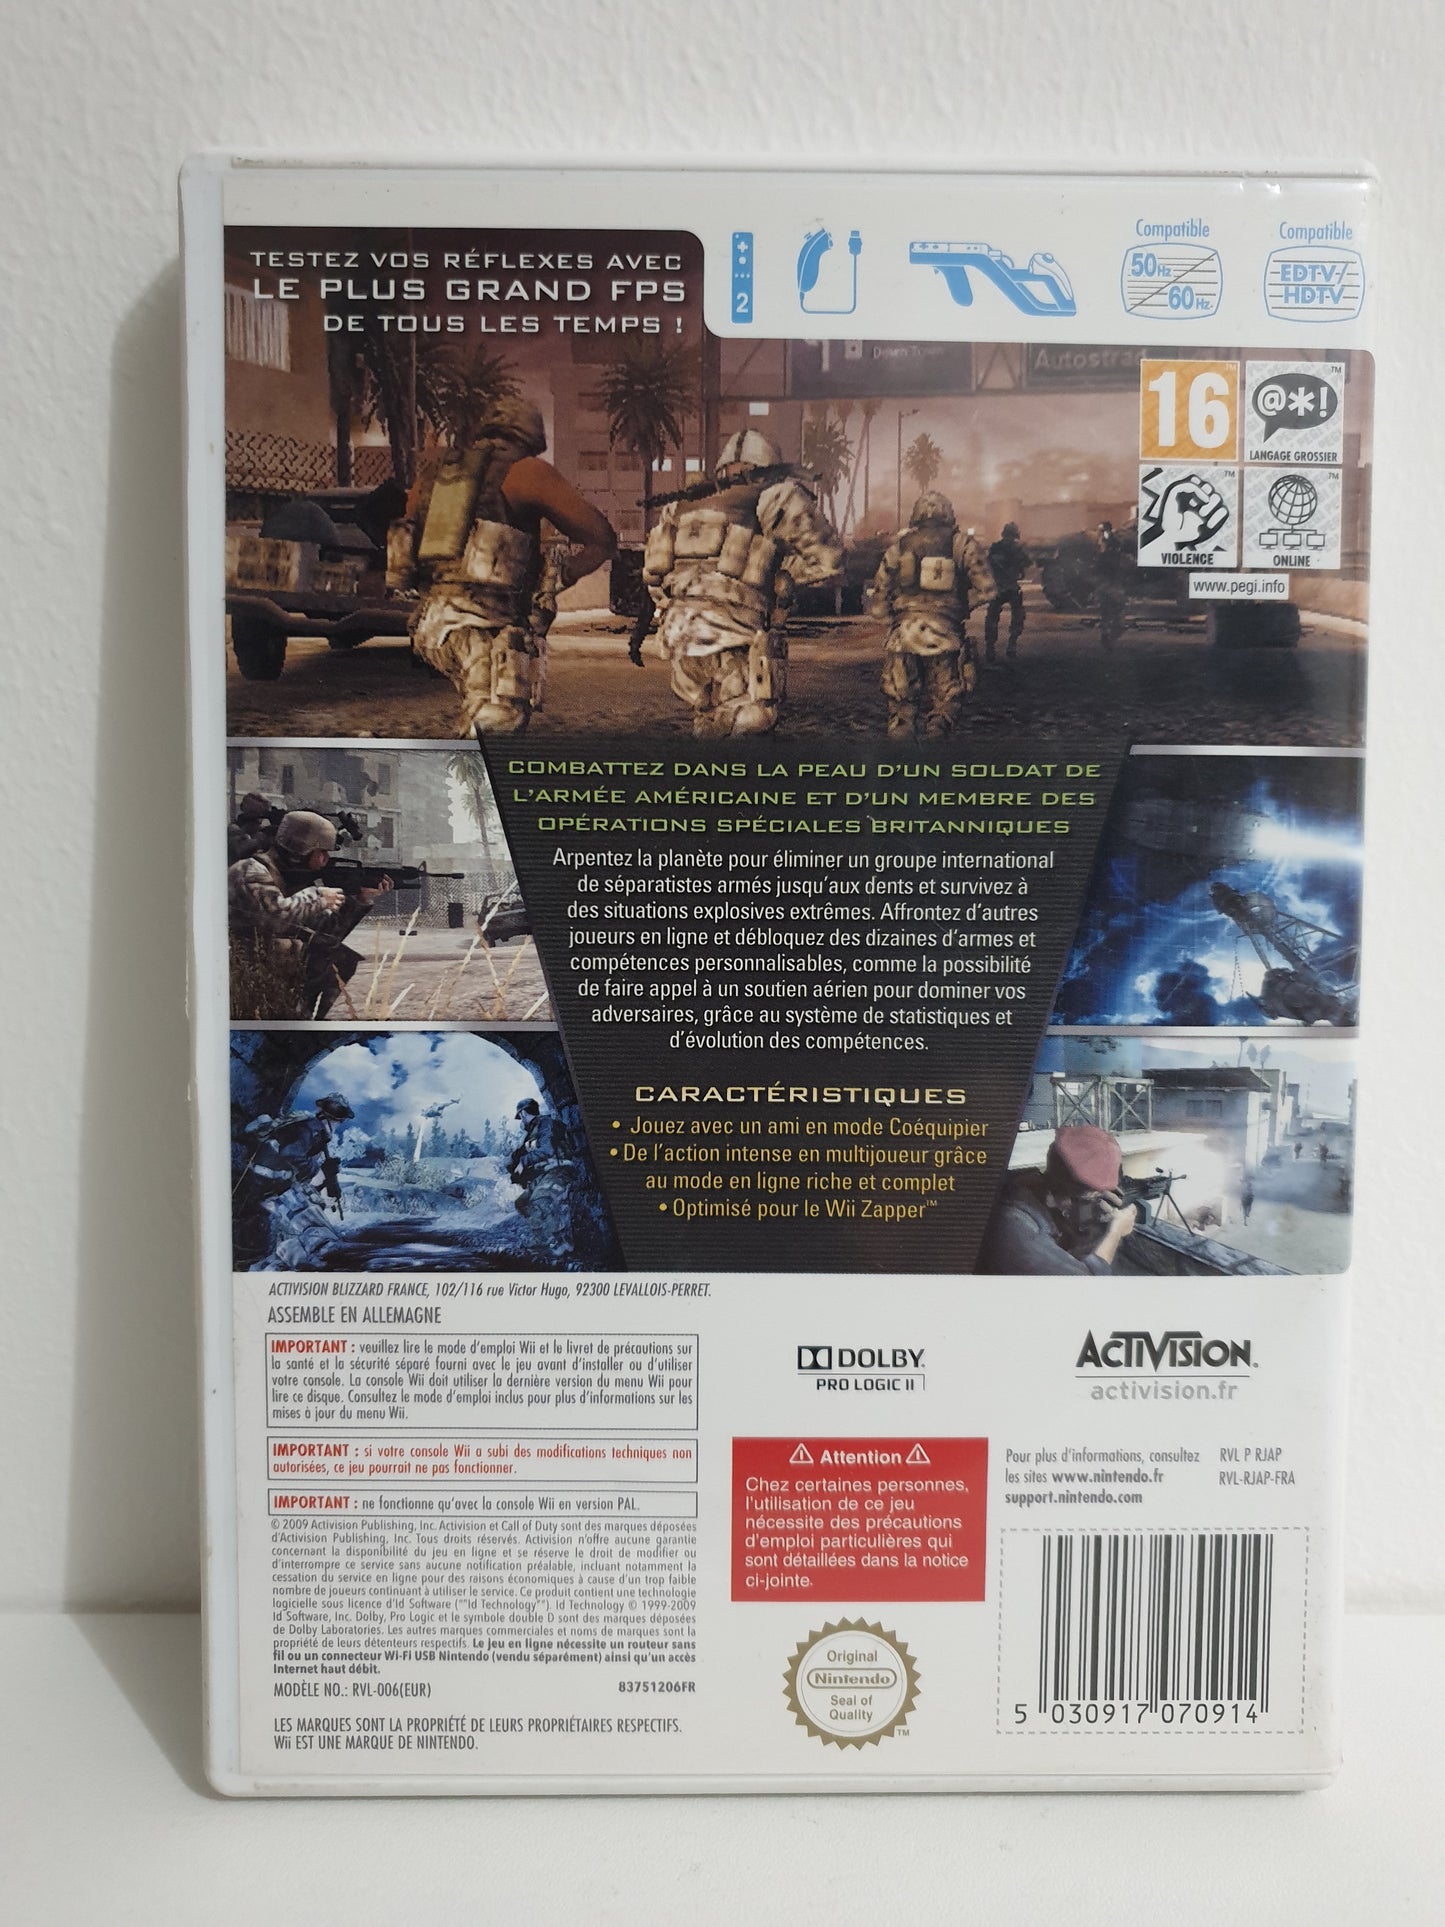 Call of Duty : Modern Warfare - Édition Réflexes Wii - Occasion bon état